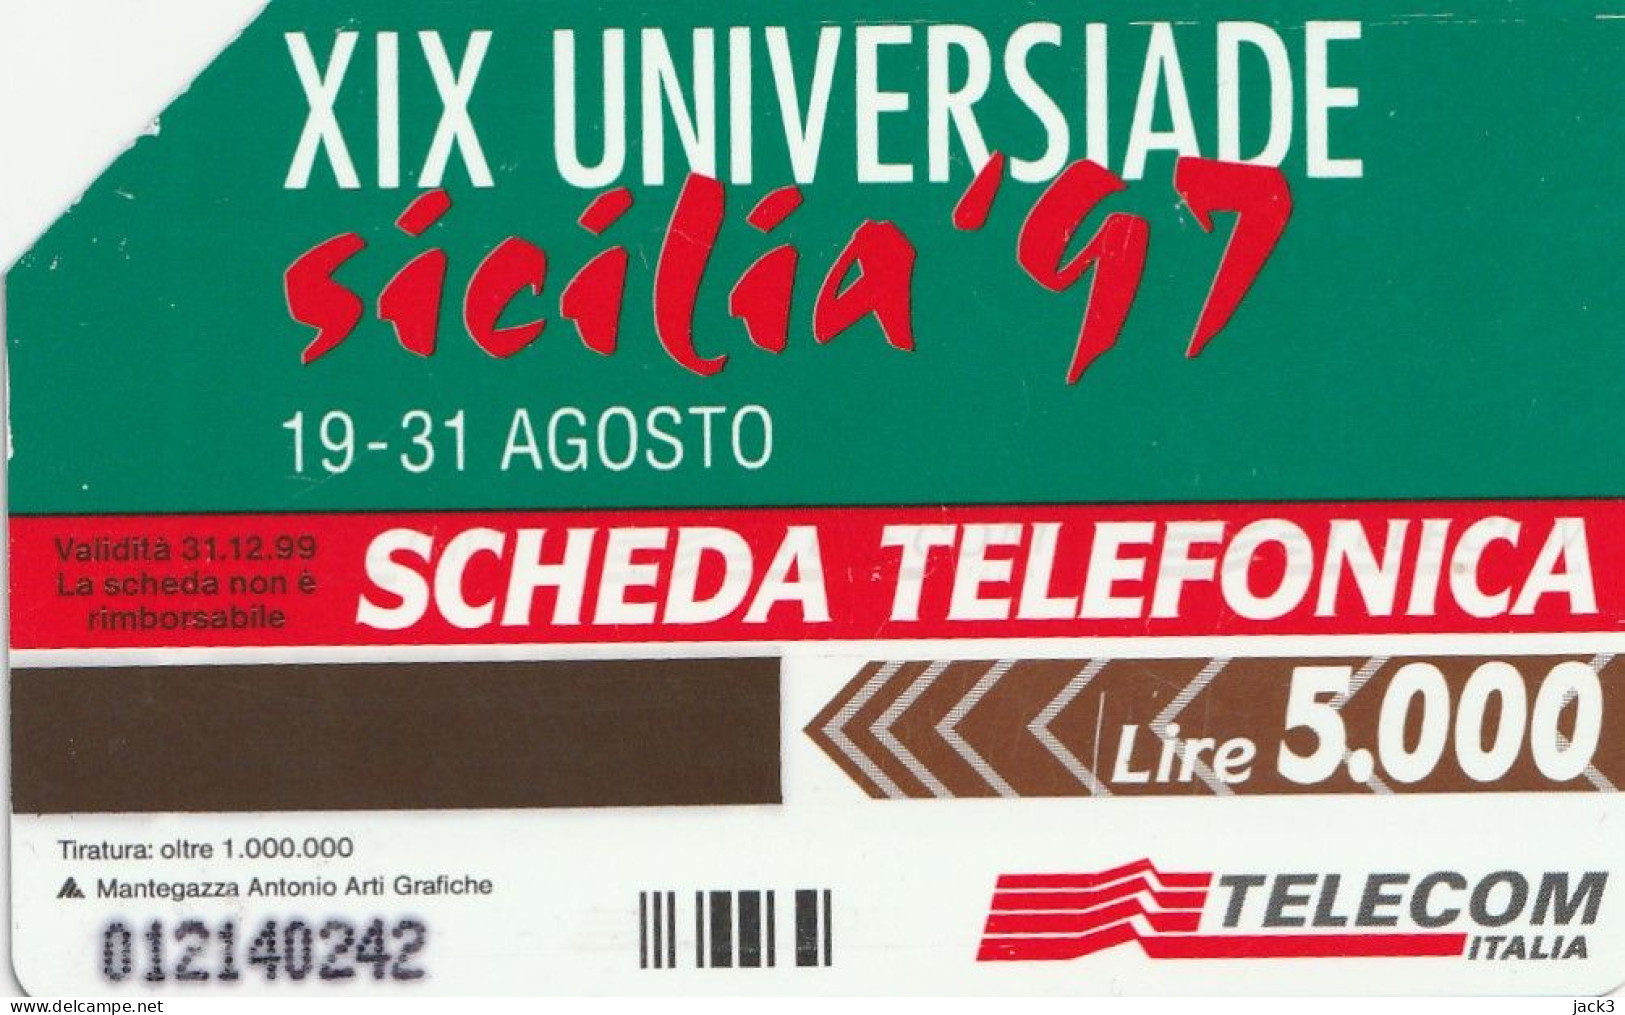 SCEDA TELEFONICA - XIX UNIVERSIADE - SICILIA '97 (2 SCANS) - Publieke Thema